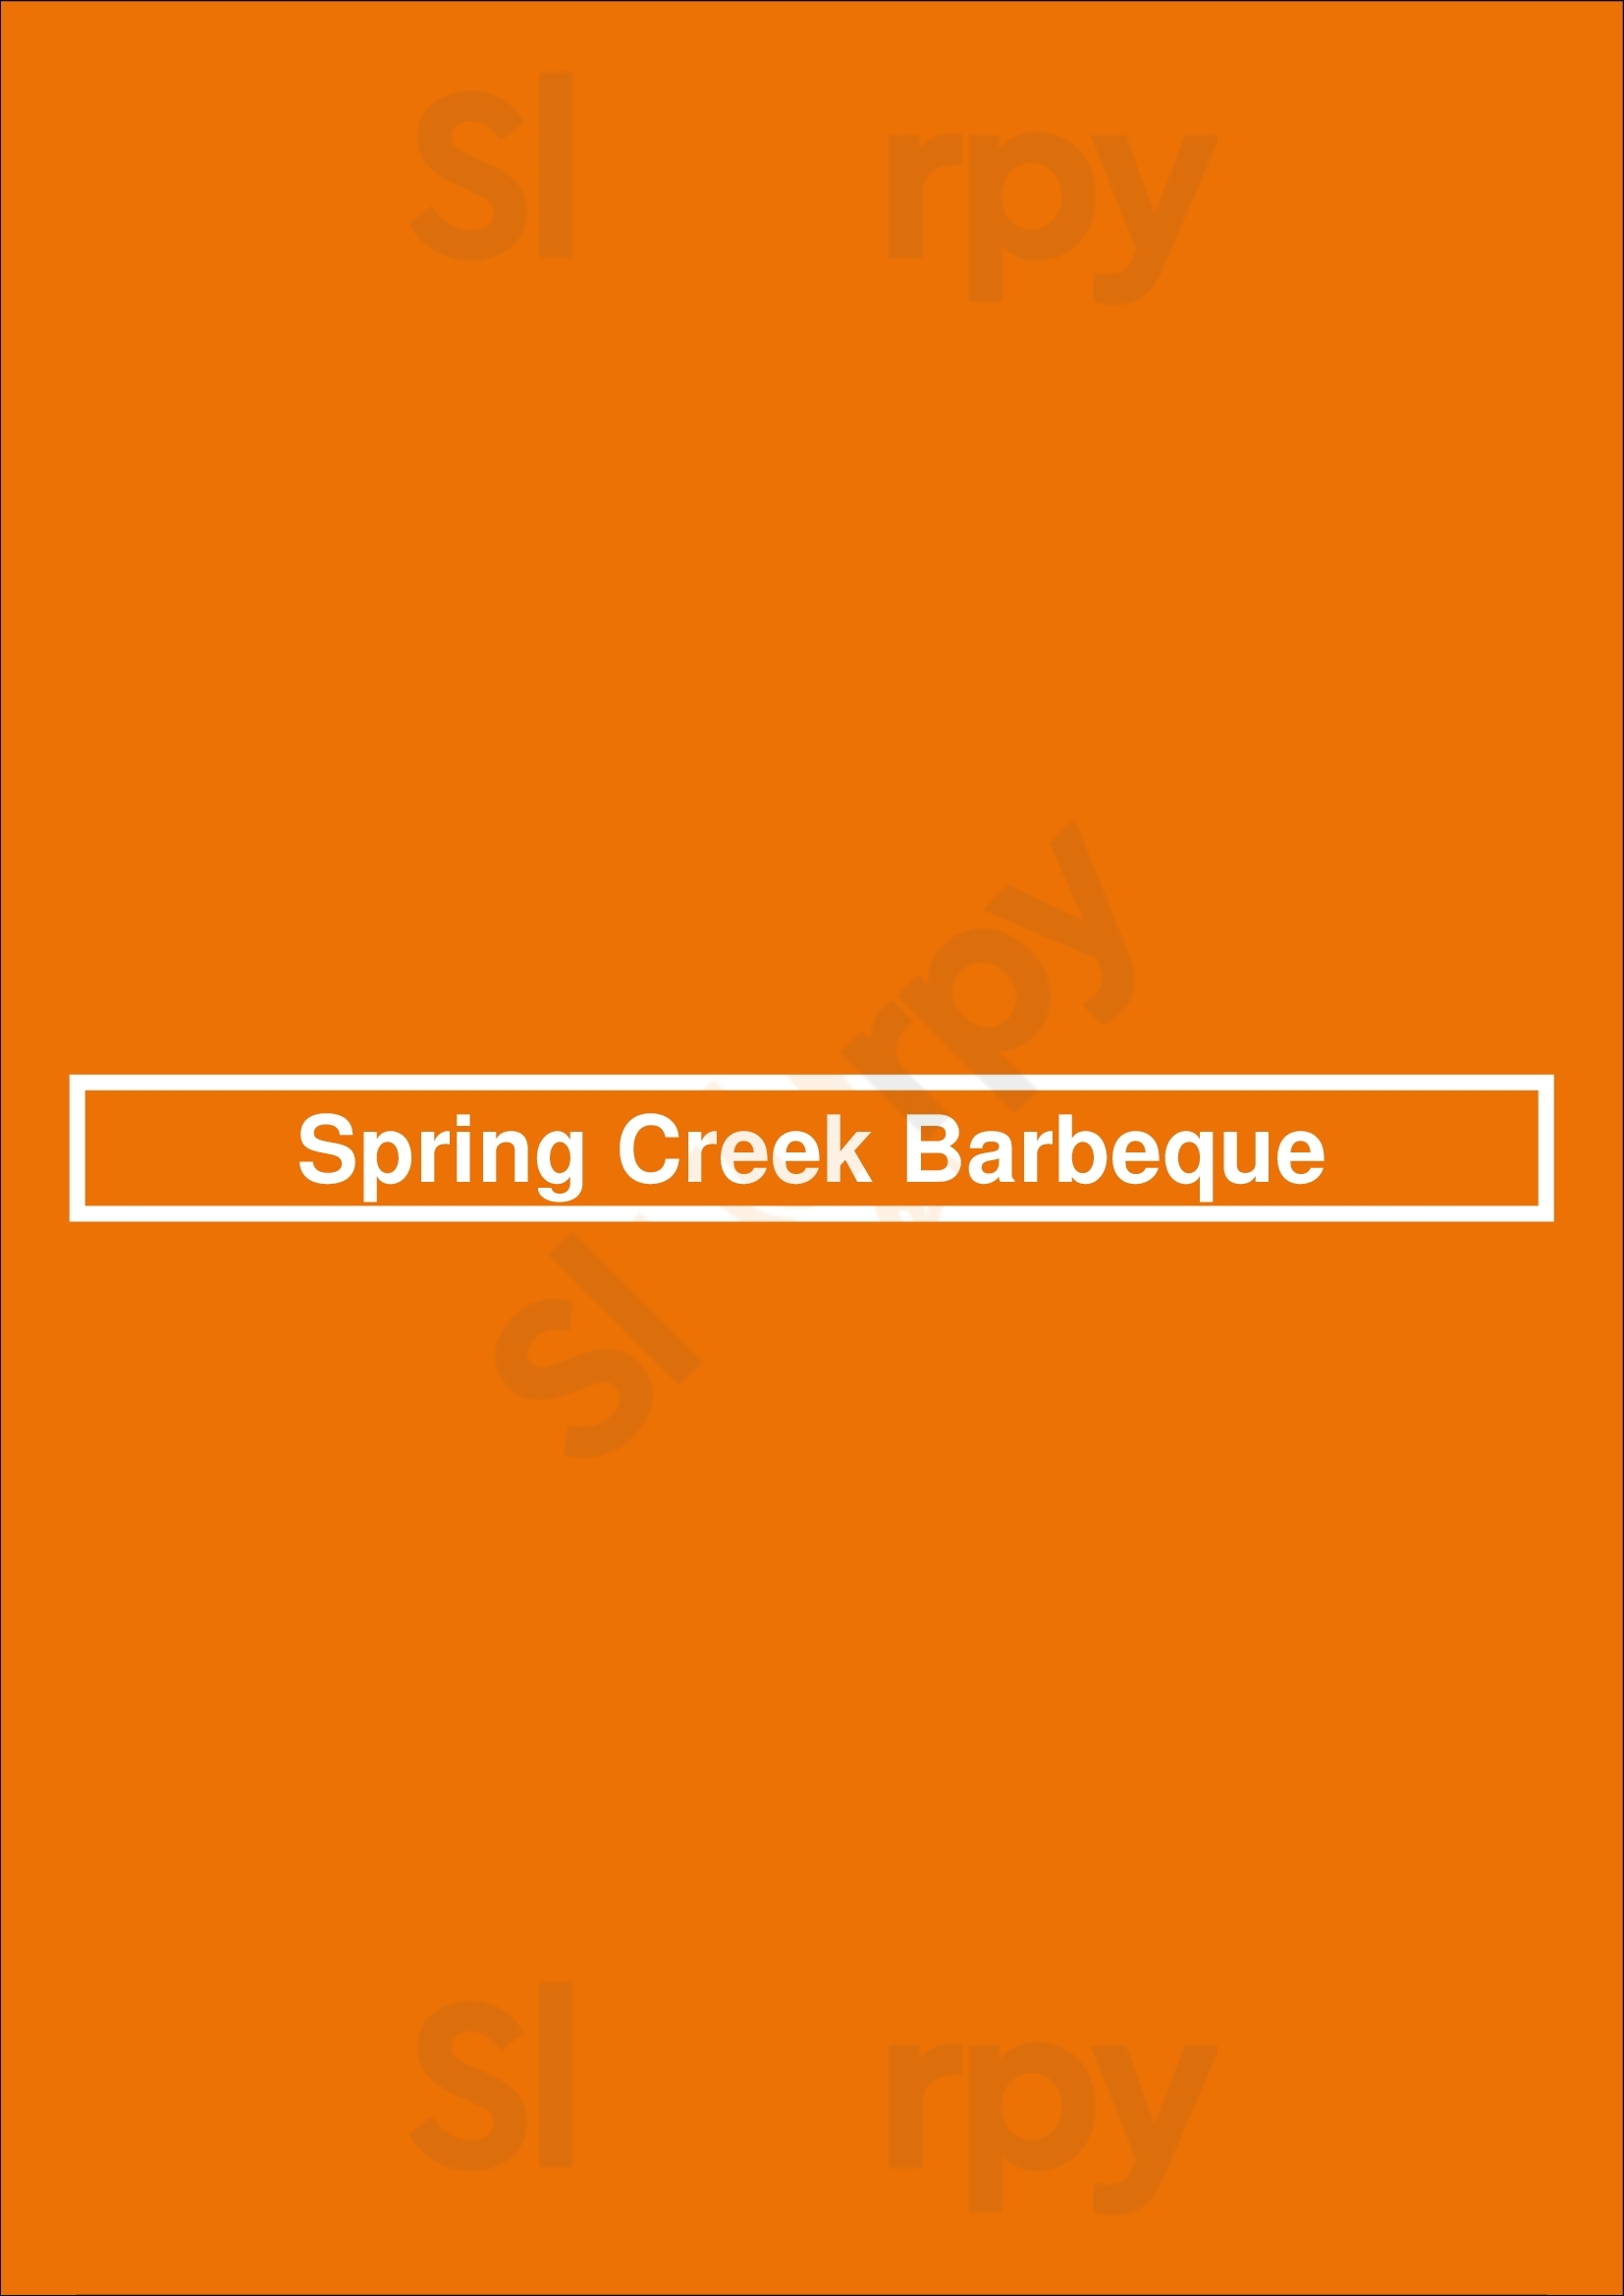 Spring Creek Barbeque Addison Menu - 1